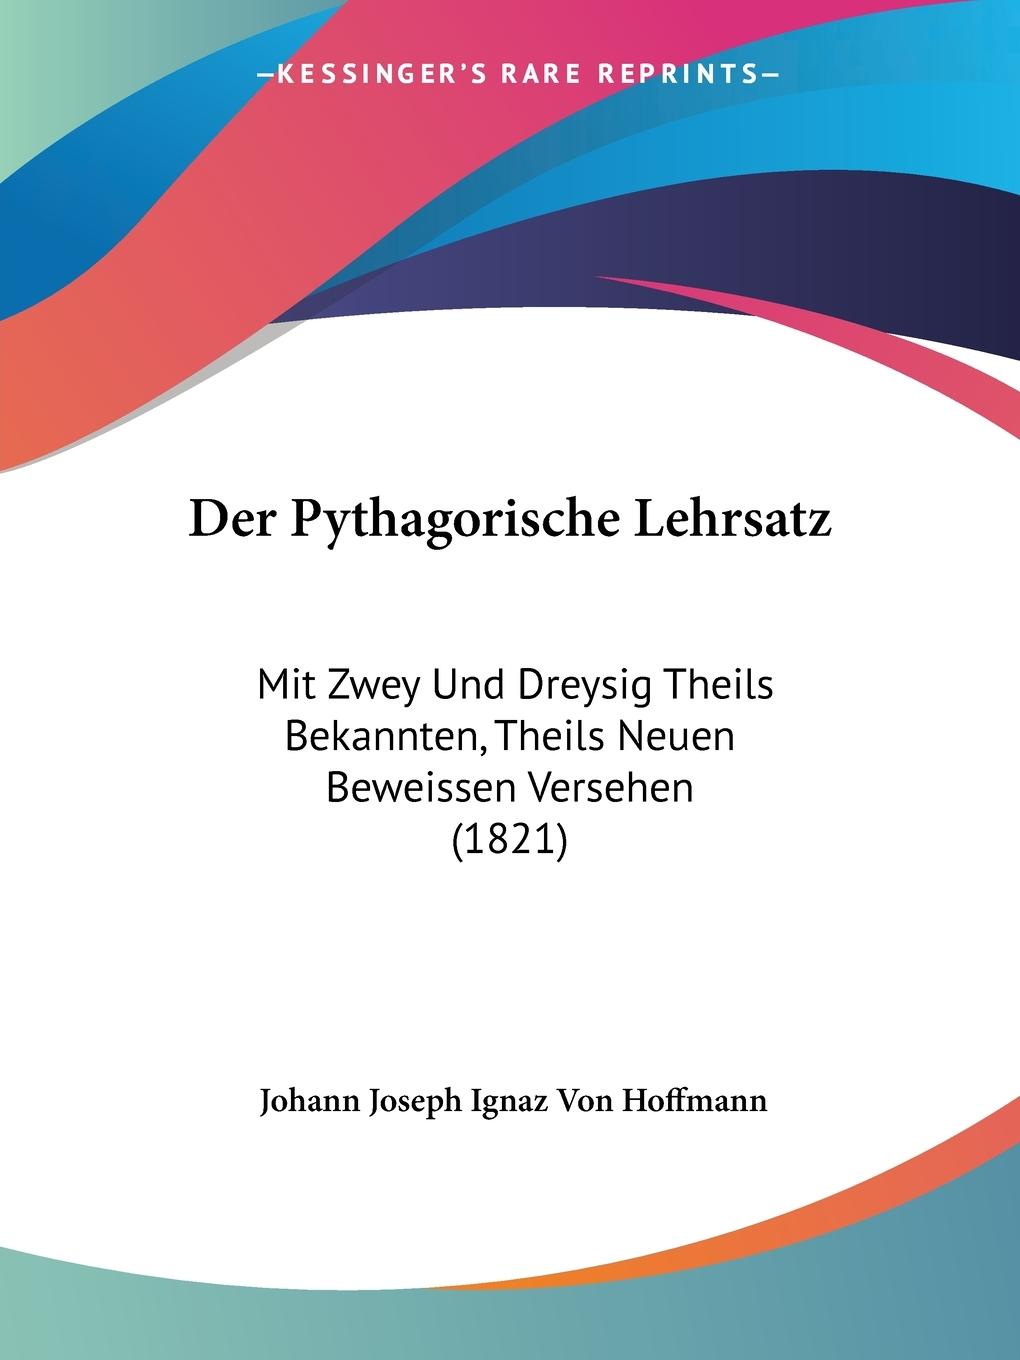 Der Pythagorische Lehrsatz - Hoffmann, Johann Joseph Ignaz Von